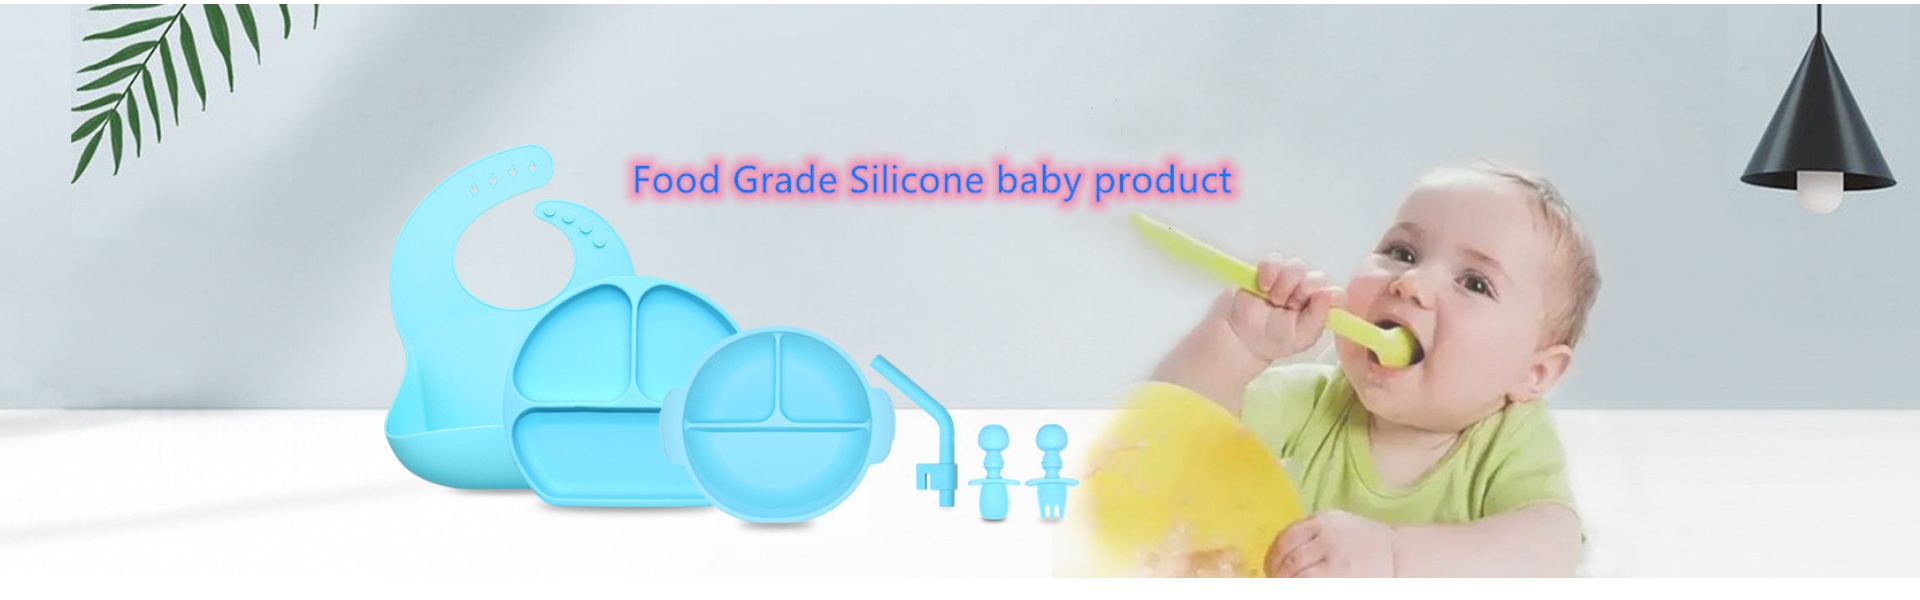 silicone kitchenware,silicone ice mold,silicone baby product,Huizhou Calipolo accessory Ltd